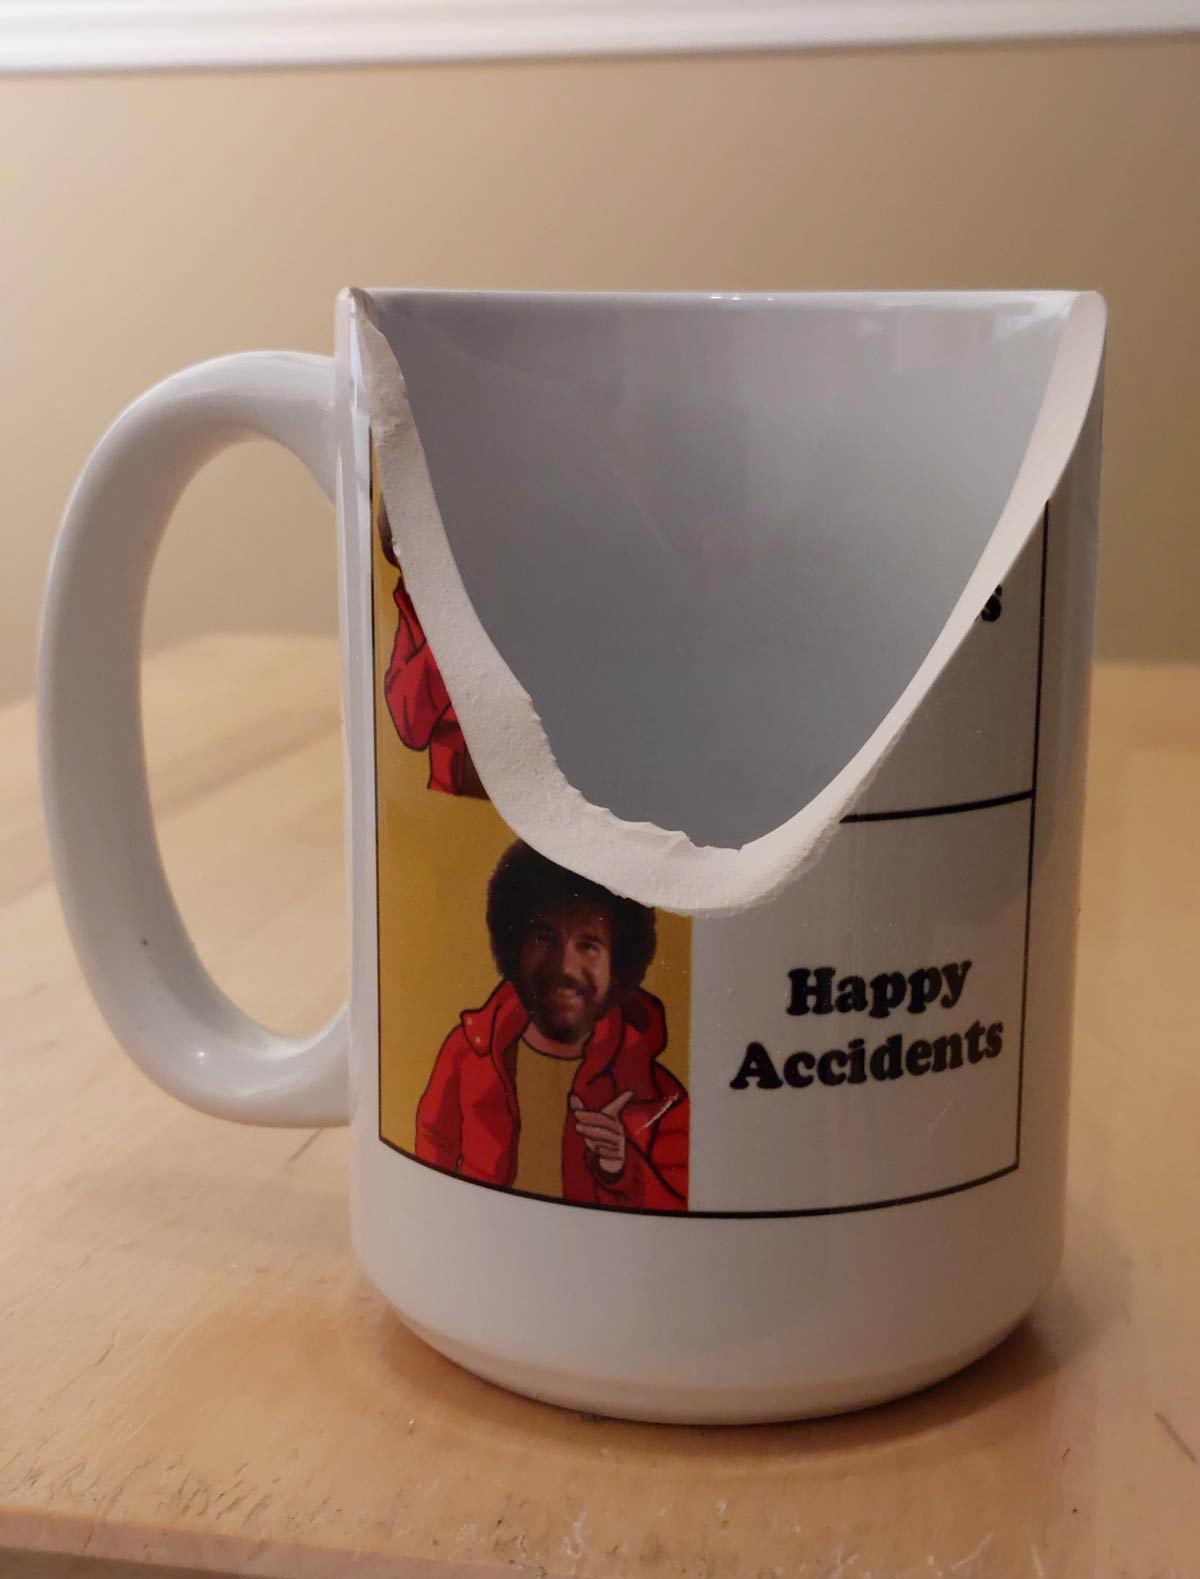 I dropped my Bob Ross coffee mug. The irony isn't lost on me